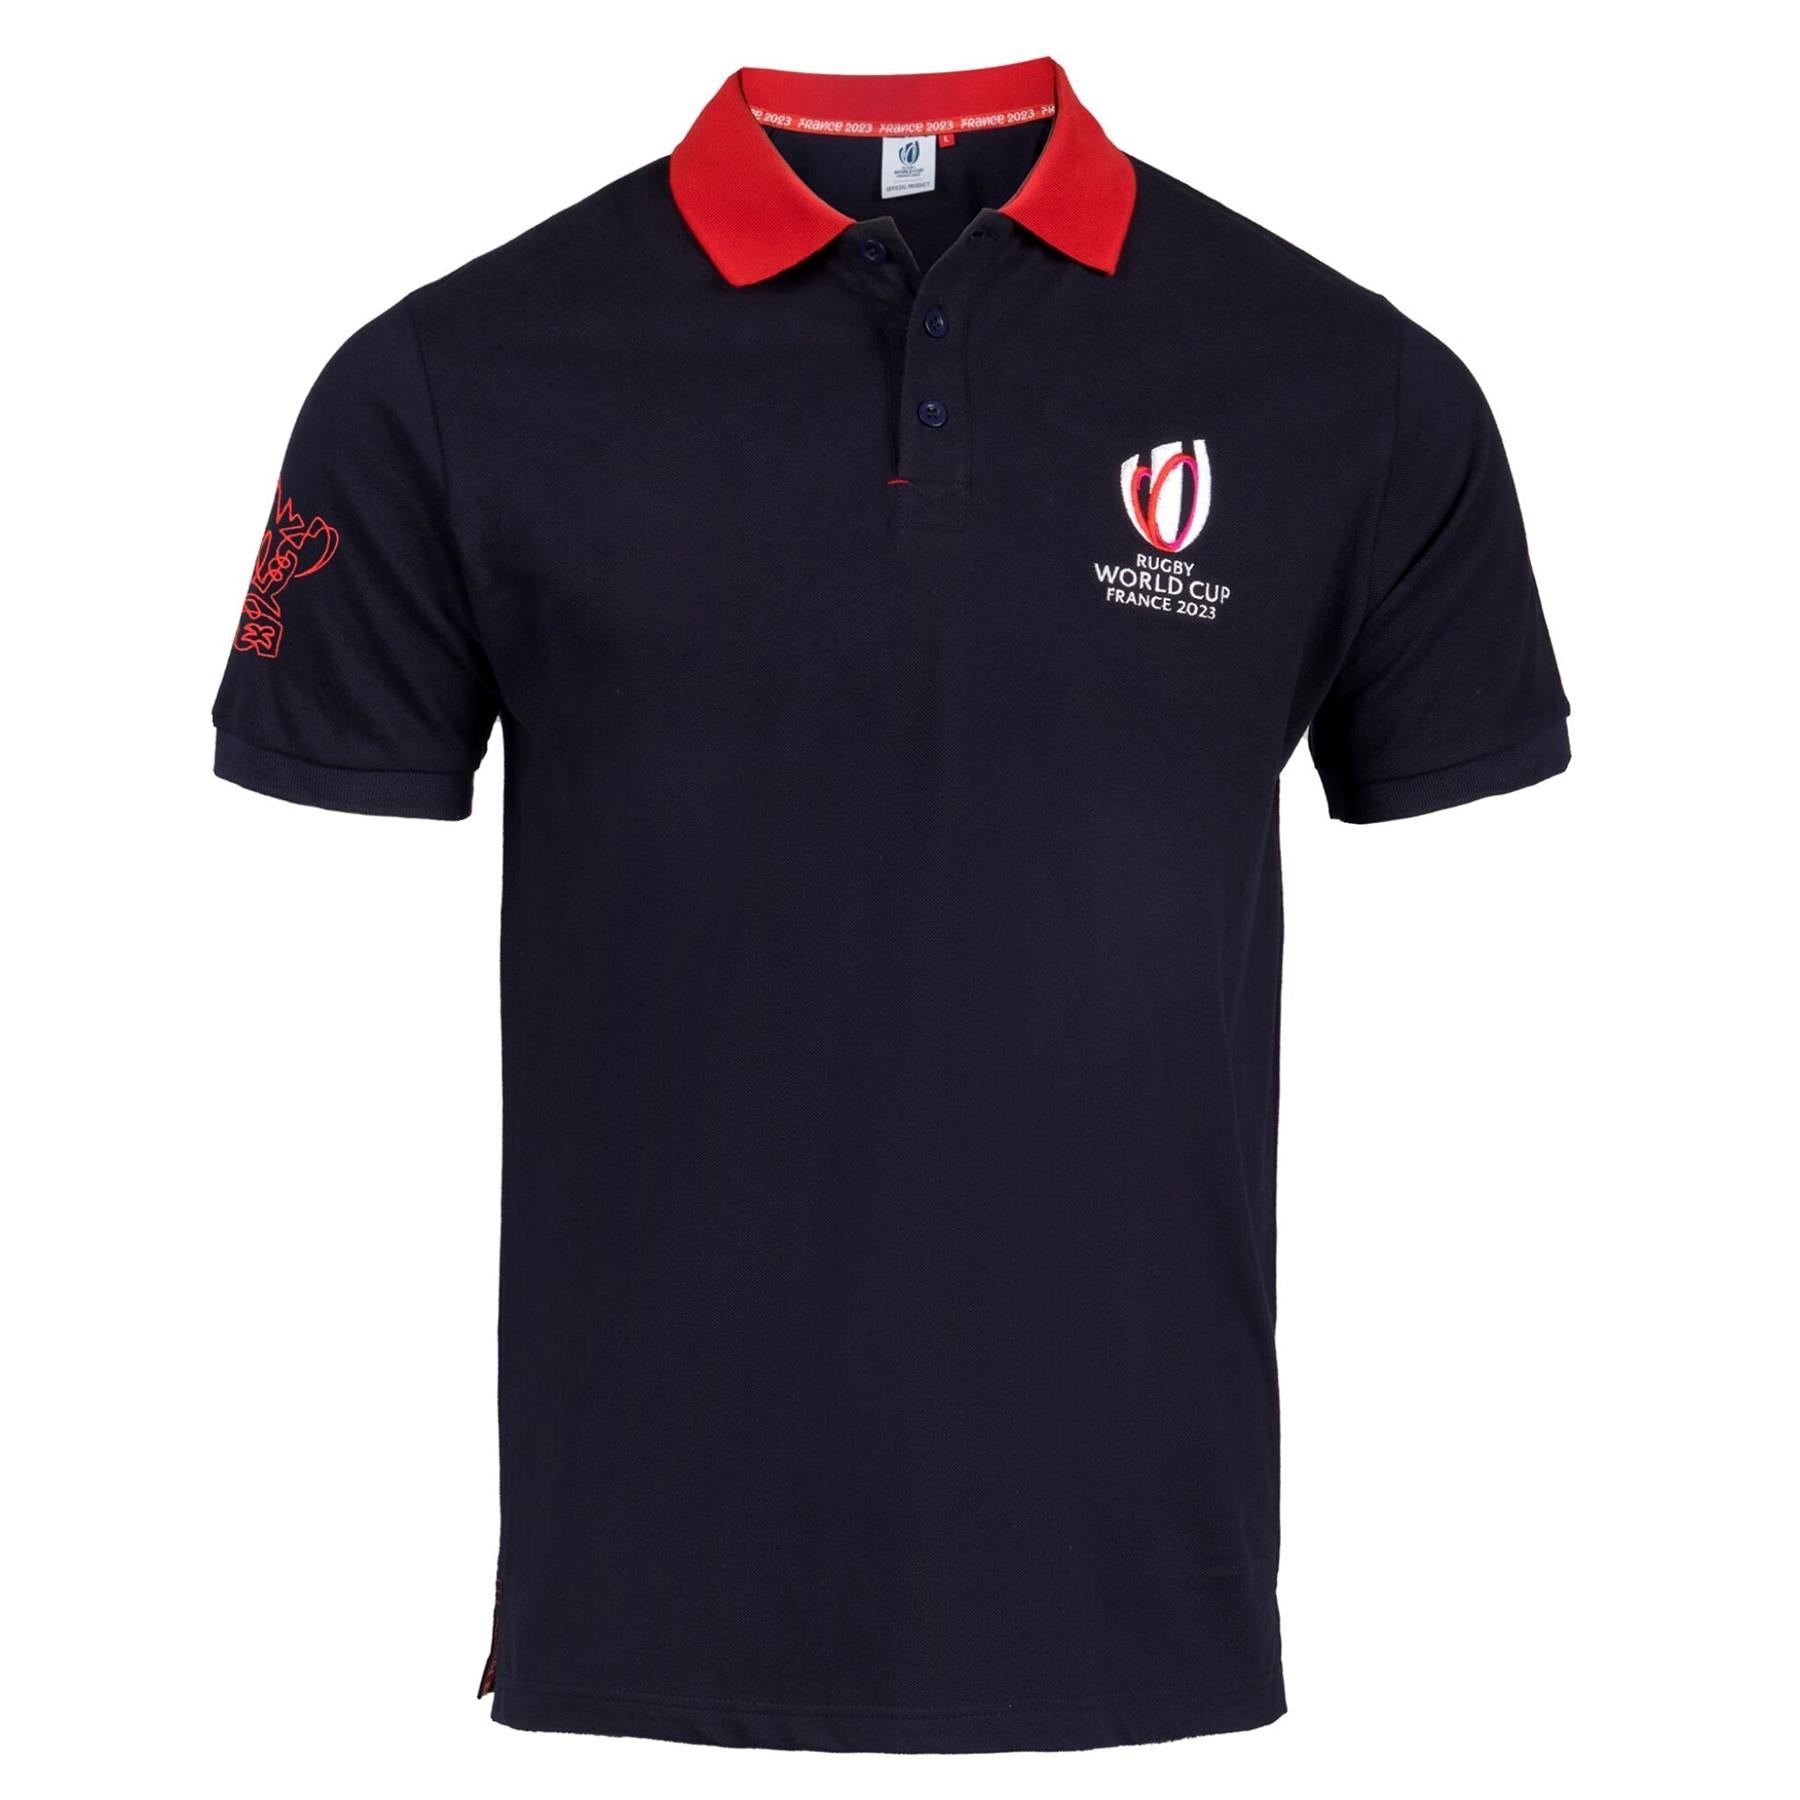 ENGLAND FC Football Club Mens Polo Shirt Tshirt Top Size XL XXL 3XL A80 